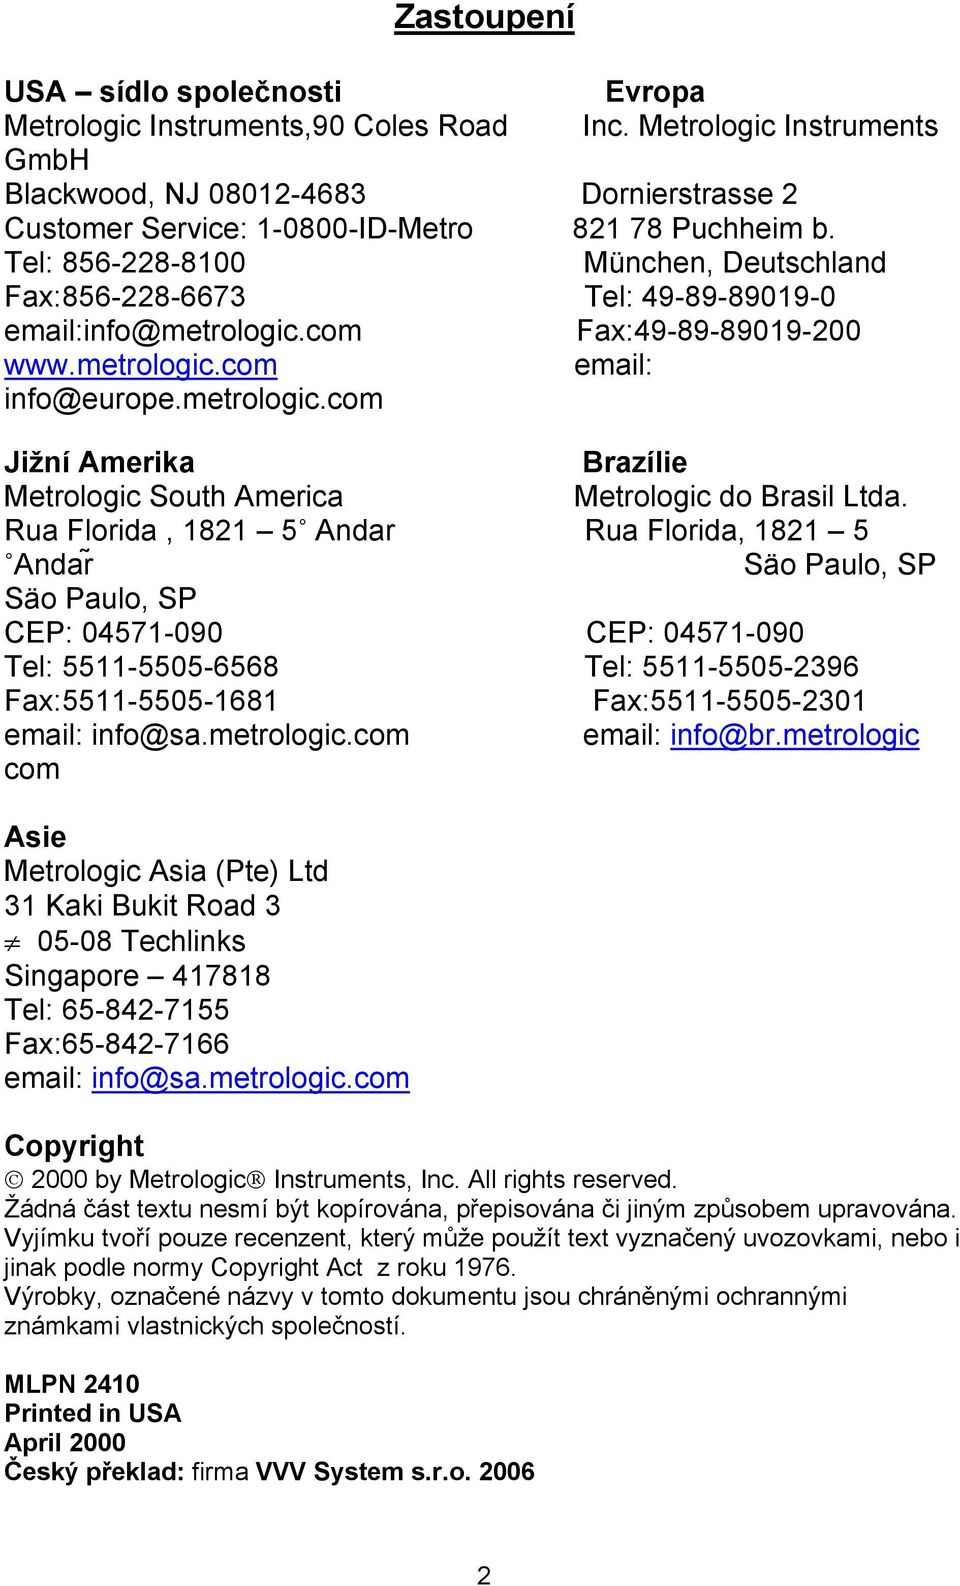 Tel: 856-228-8100 München, Deutschland Fax:856-228-6673 Tel: 49-89-89019-0 email:info@metrologic.com Fax:49-89-89019-200 www.metrologic.com email: info@europe.metrologic.com Jižní Amerika Brazílie Metrologic South America Metrologic do Brasil Ltda.